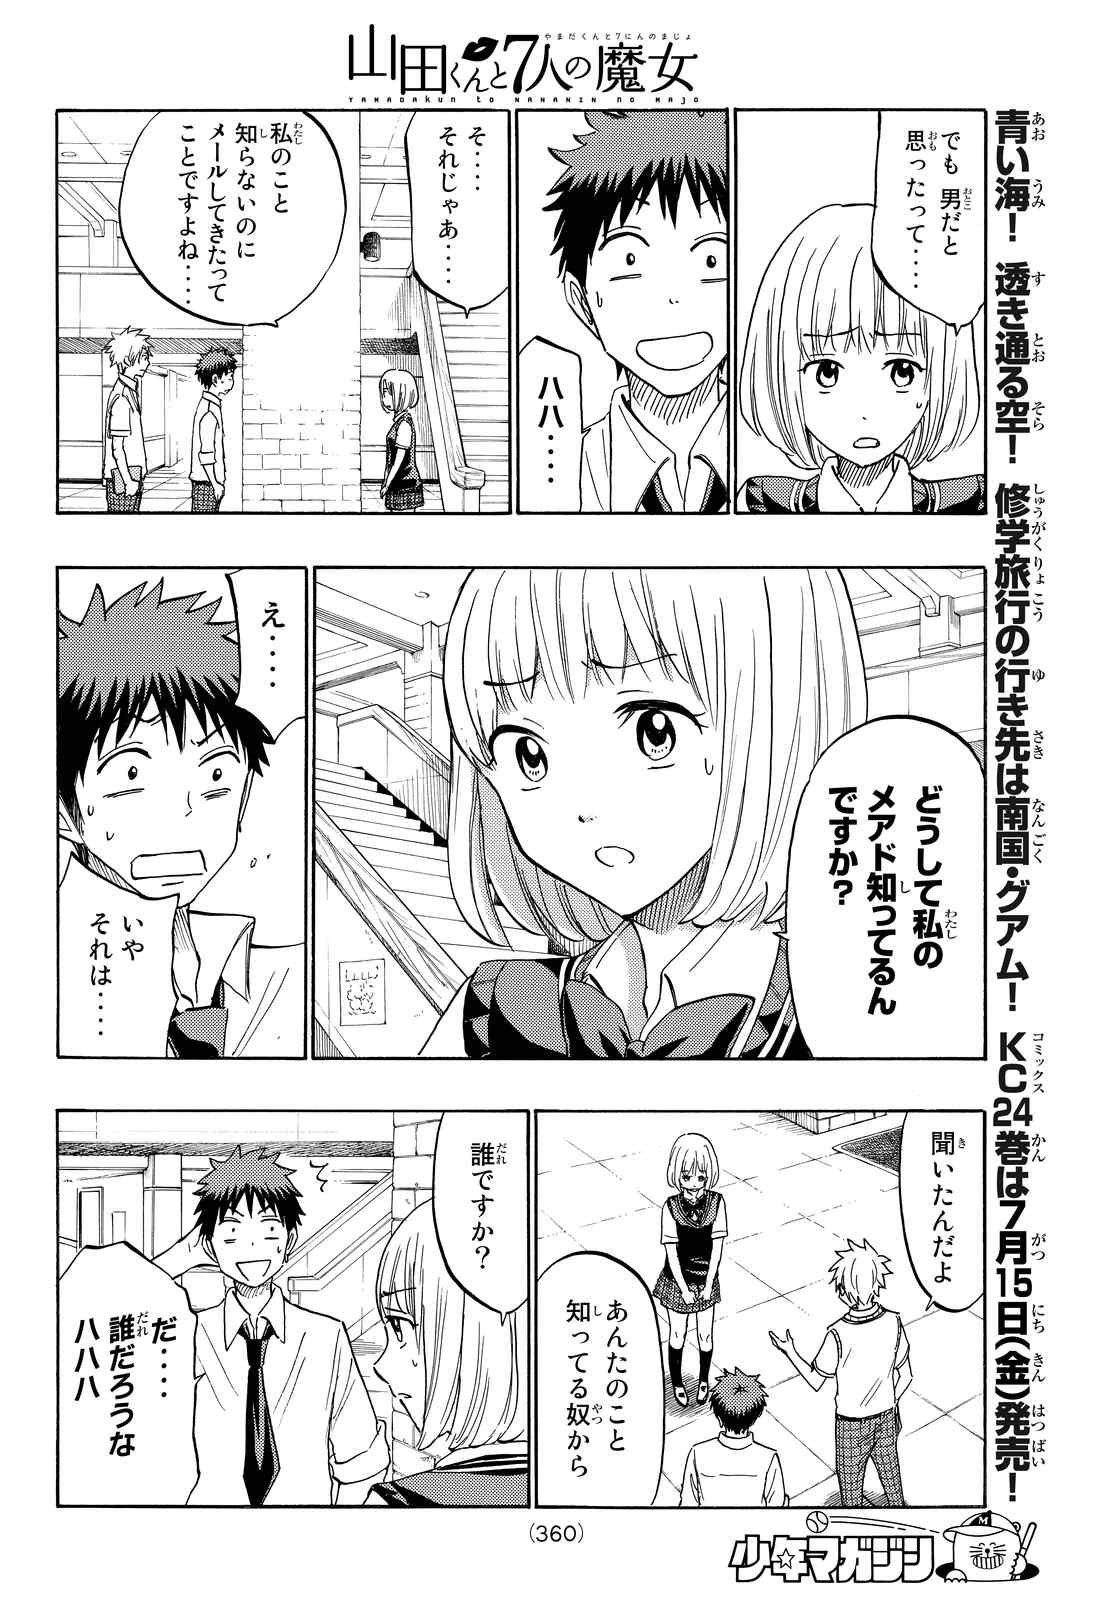 Yamada-kun to 7-nin no Majo - Chapter 208 - Page 4